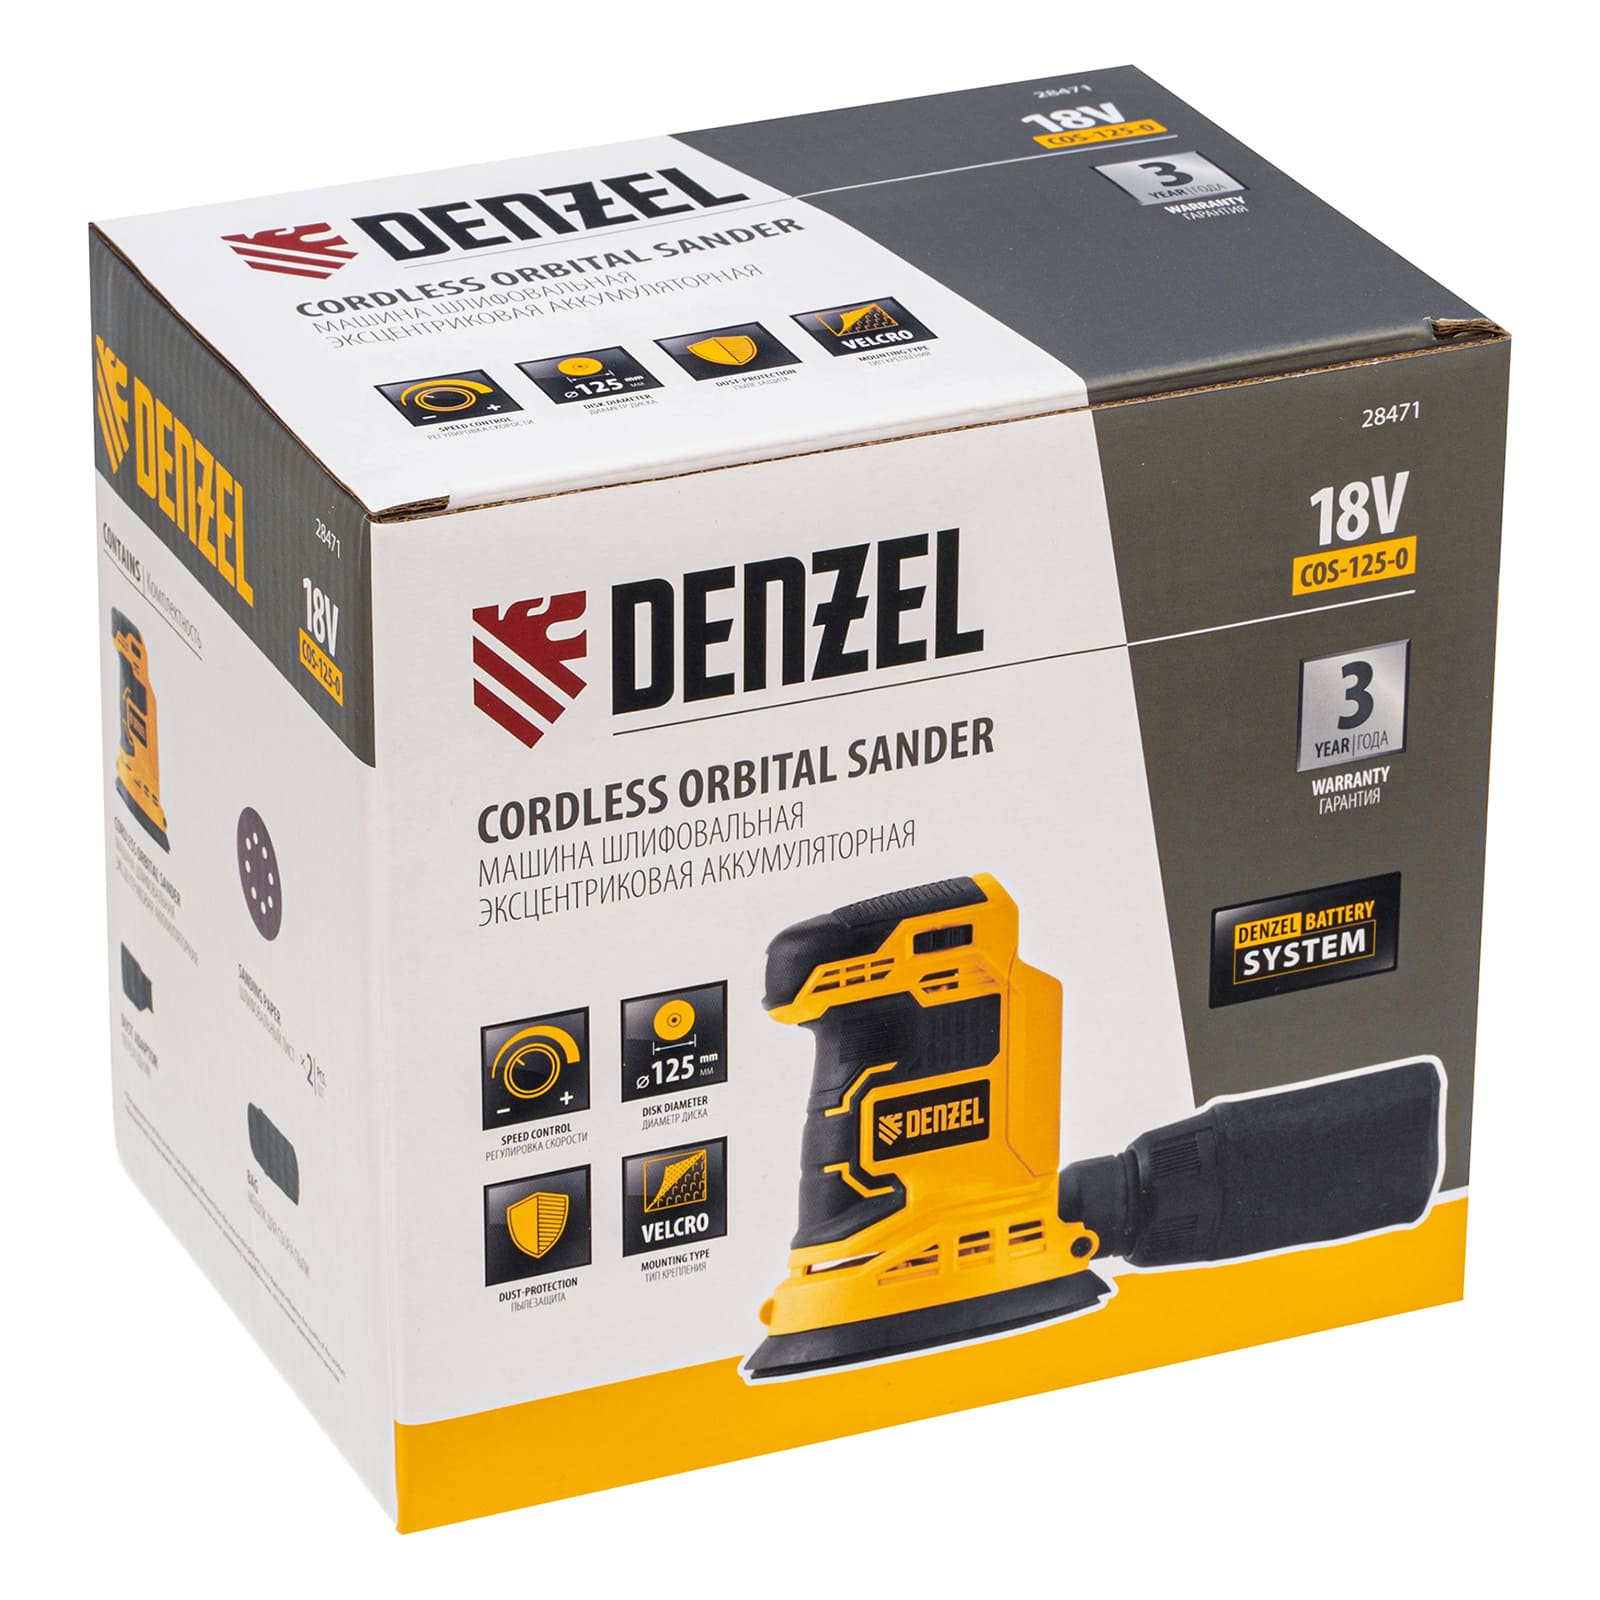 Аккумуляторная машина шлифовальная эксцентриковая DENZEL COS-125-0 (аккум. система Denzel Battery System 18V, без АКБ)